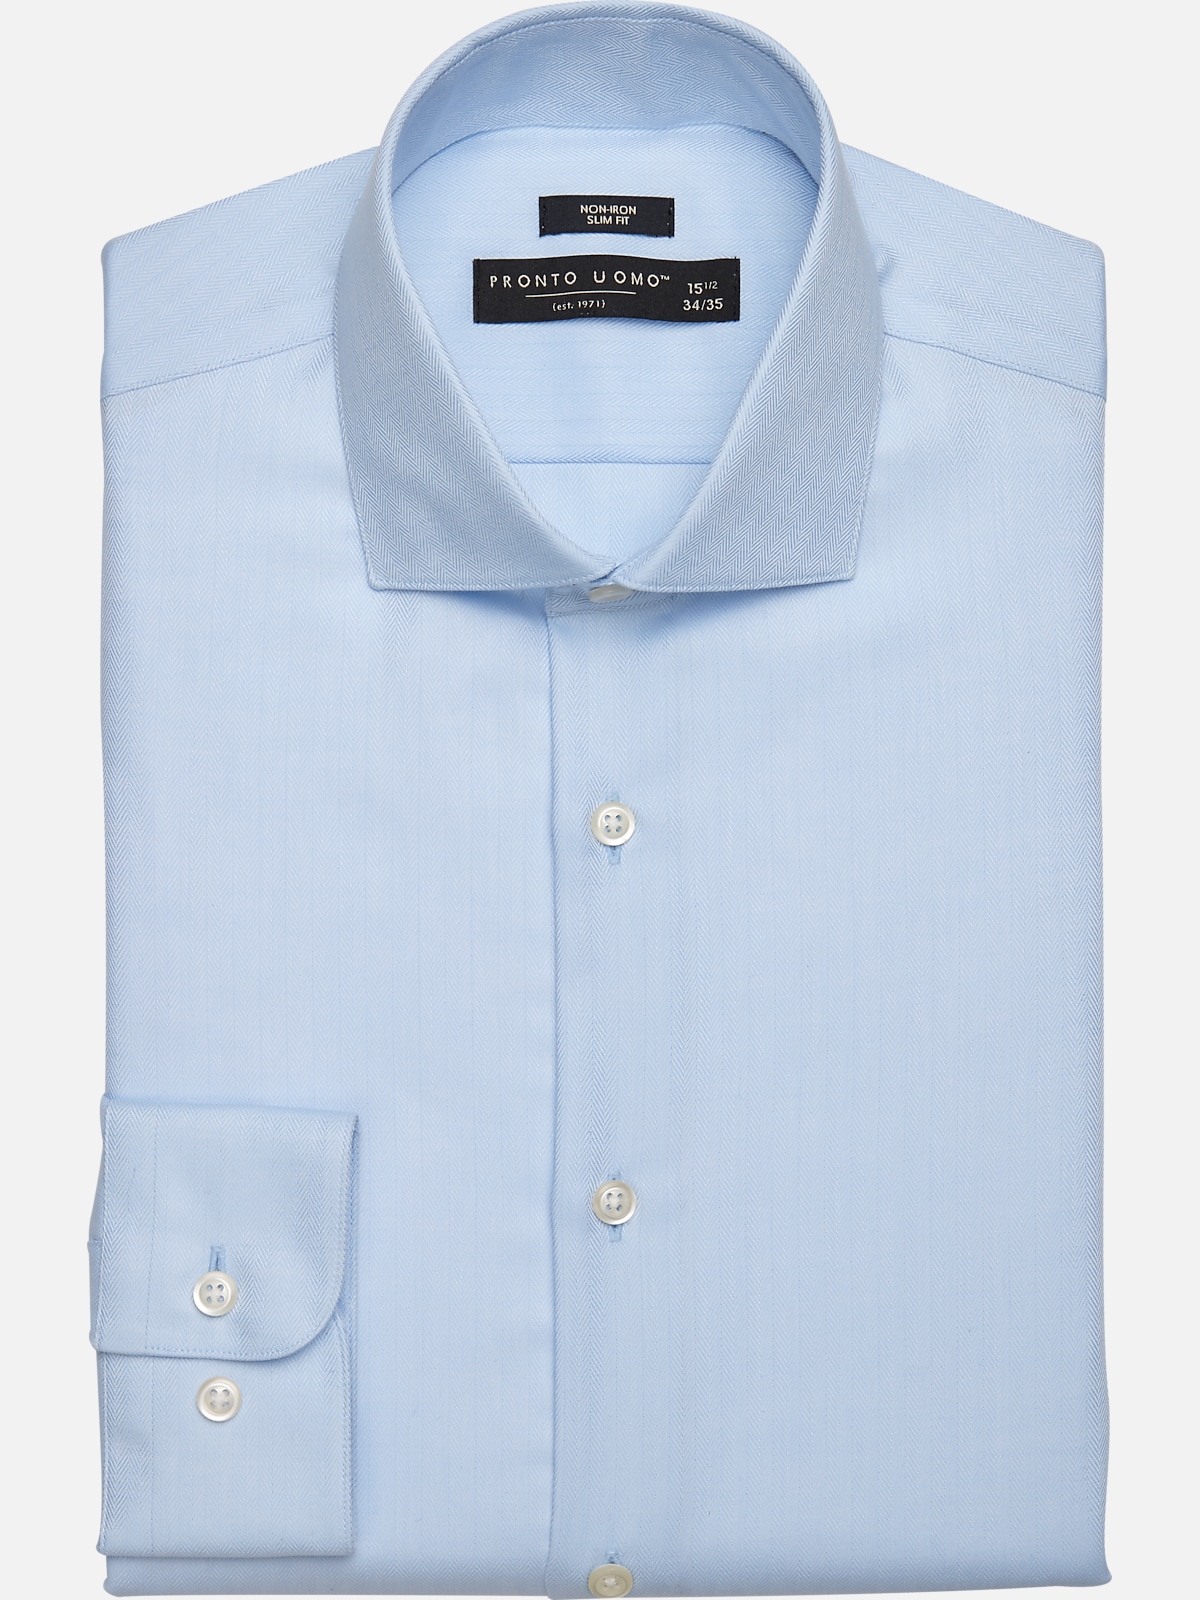 Pronto Uomo Slim Fit Herringbone Dress Shirt | Clearance Dress Shirts ...